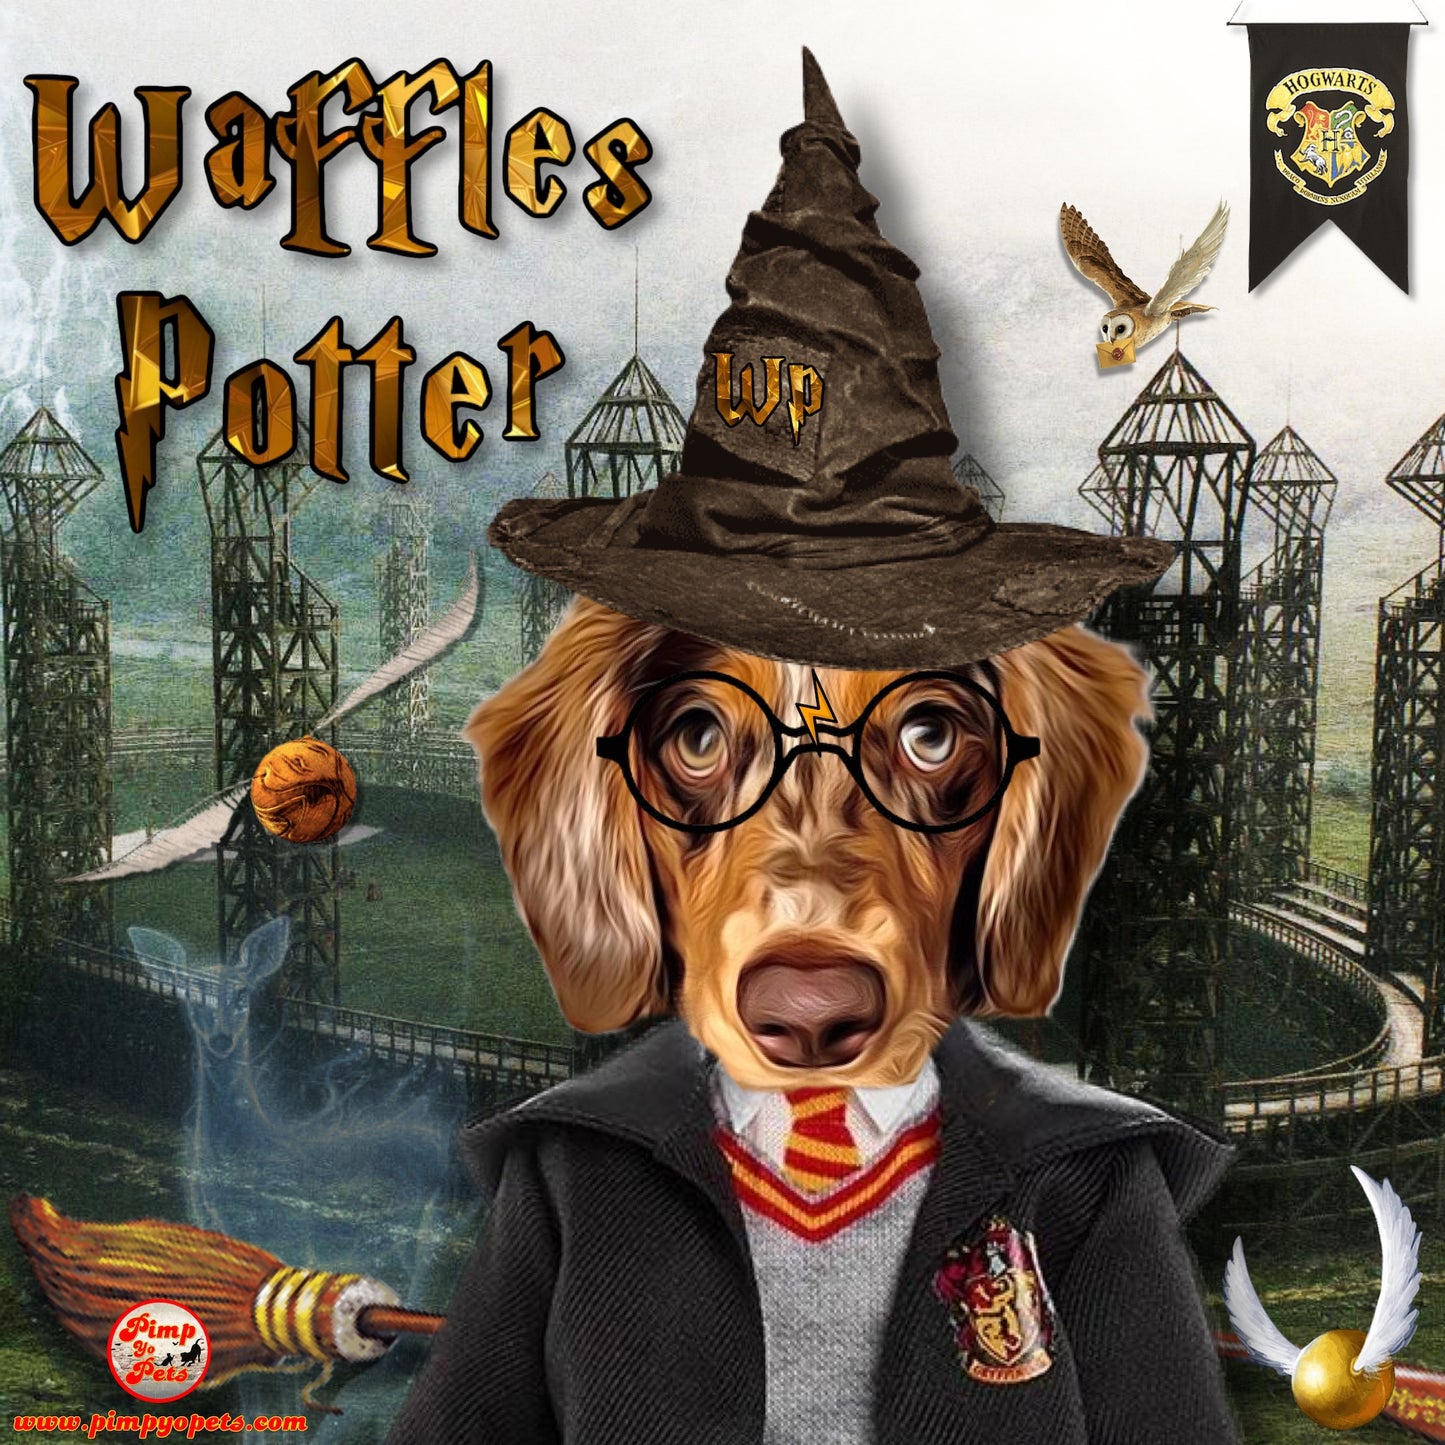 Doggy Potter Theme Pet Portraits on Canvas